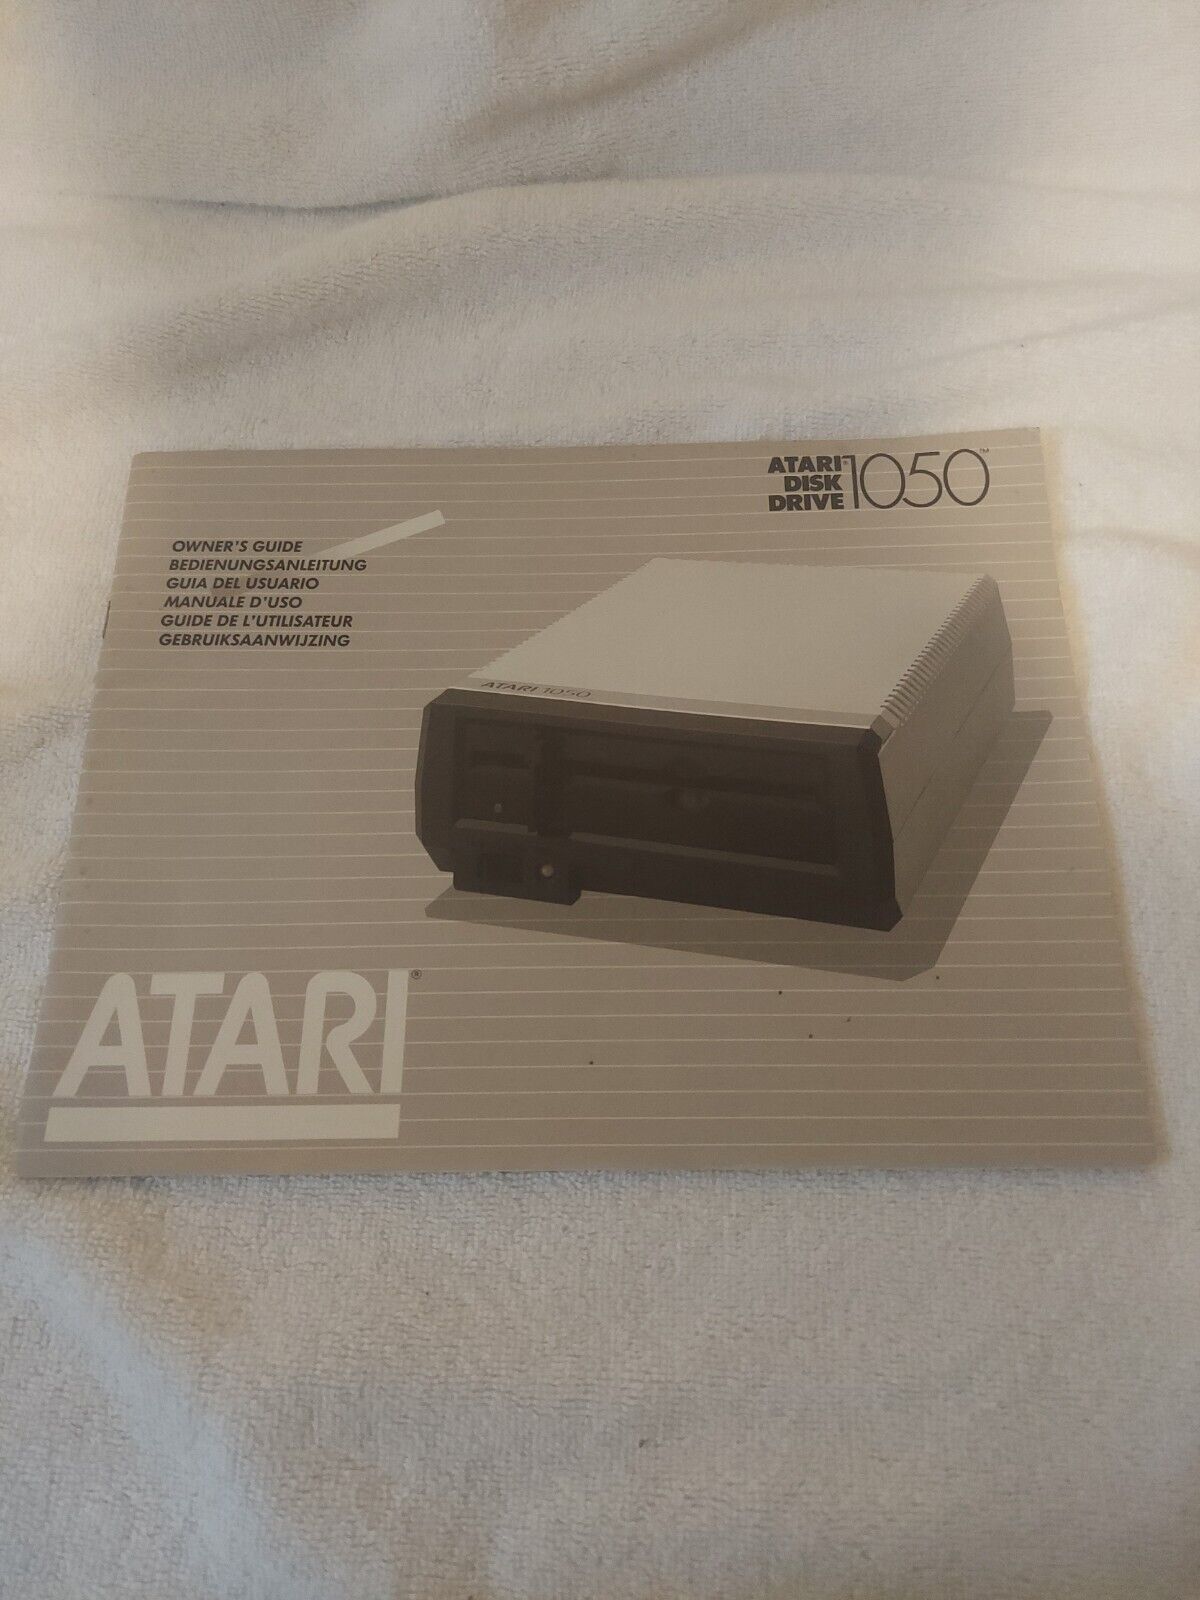 Atari Disk Drive 1050 Original printed 1983 OWNERS GUIDE 37 Pages in 5 languages